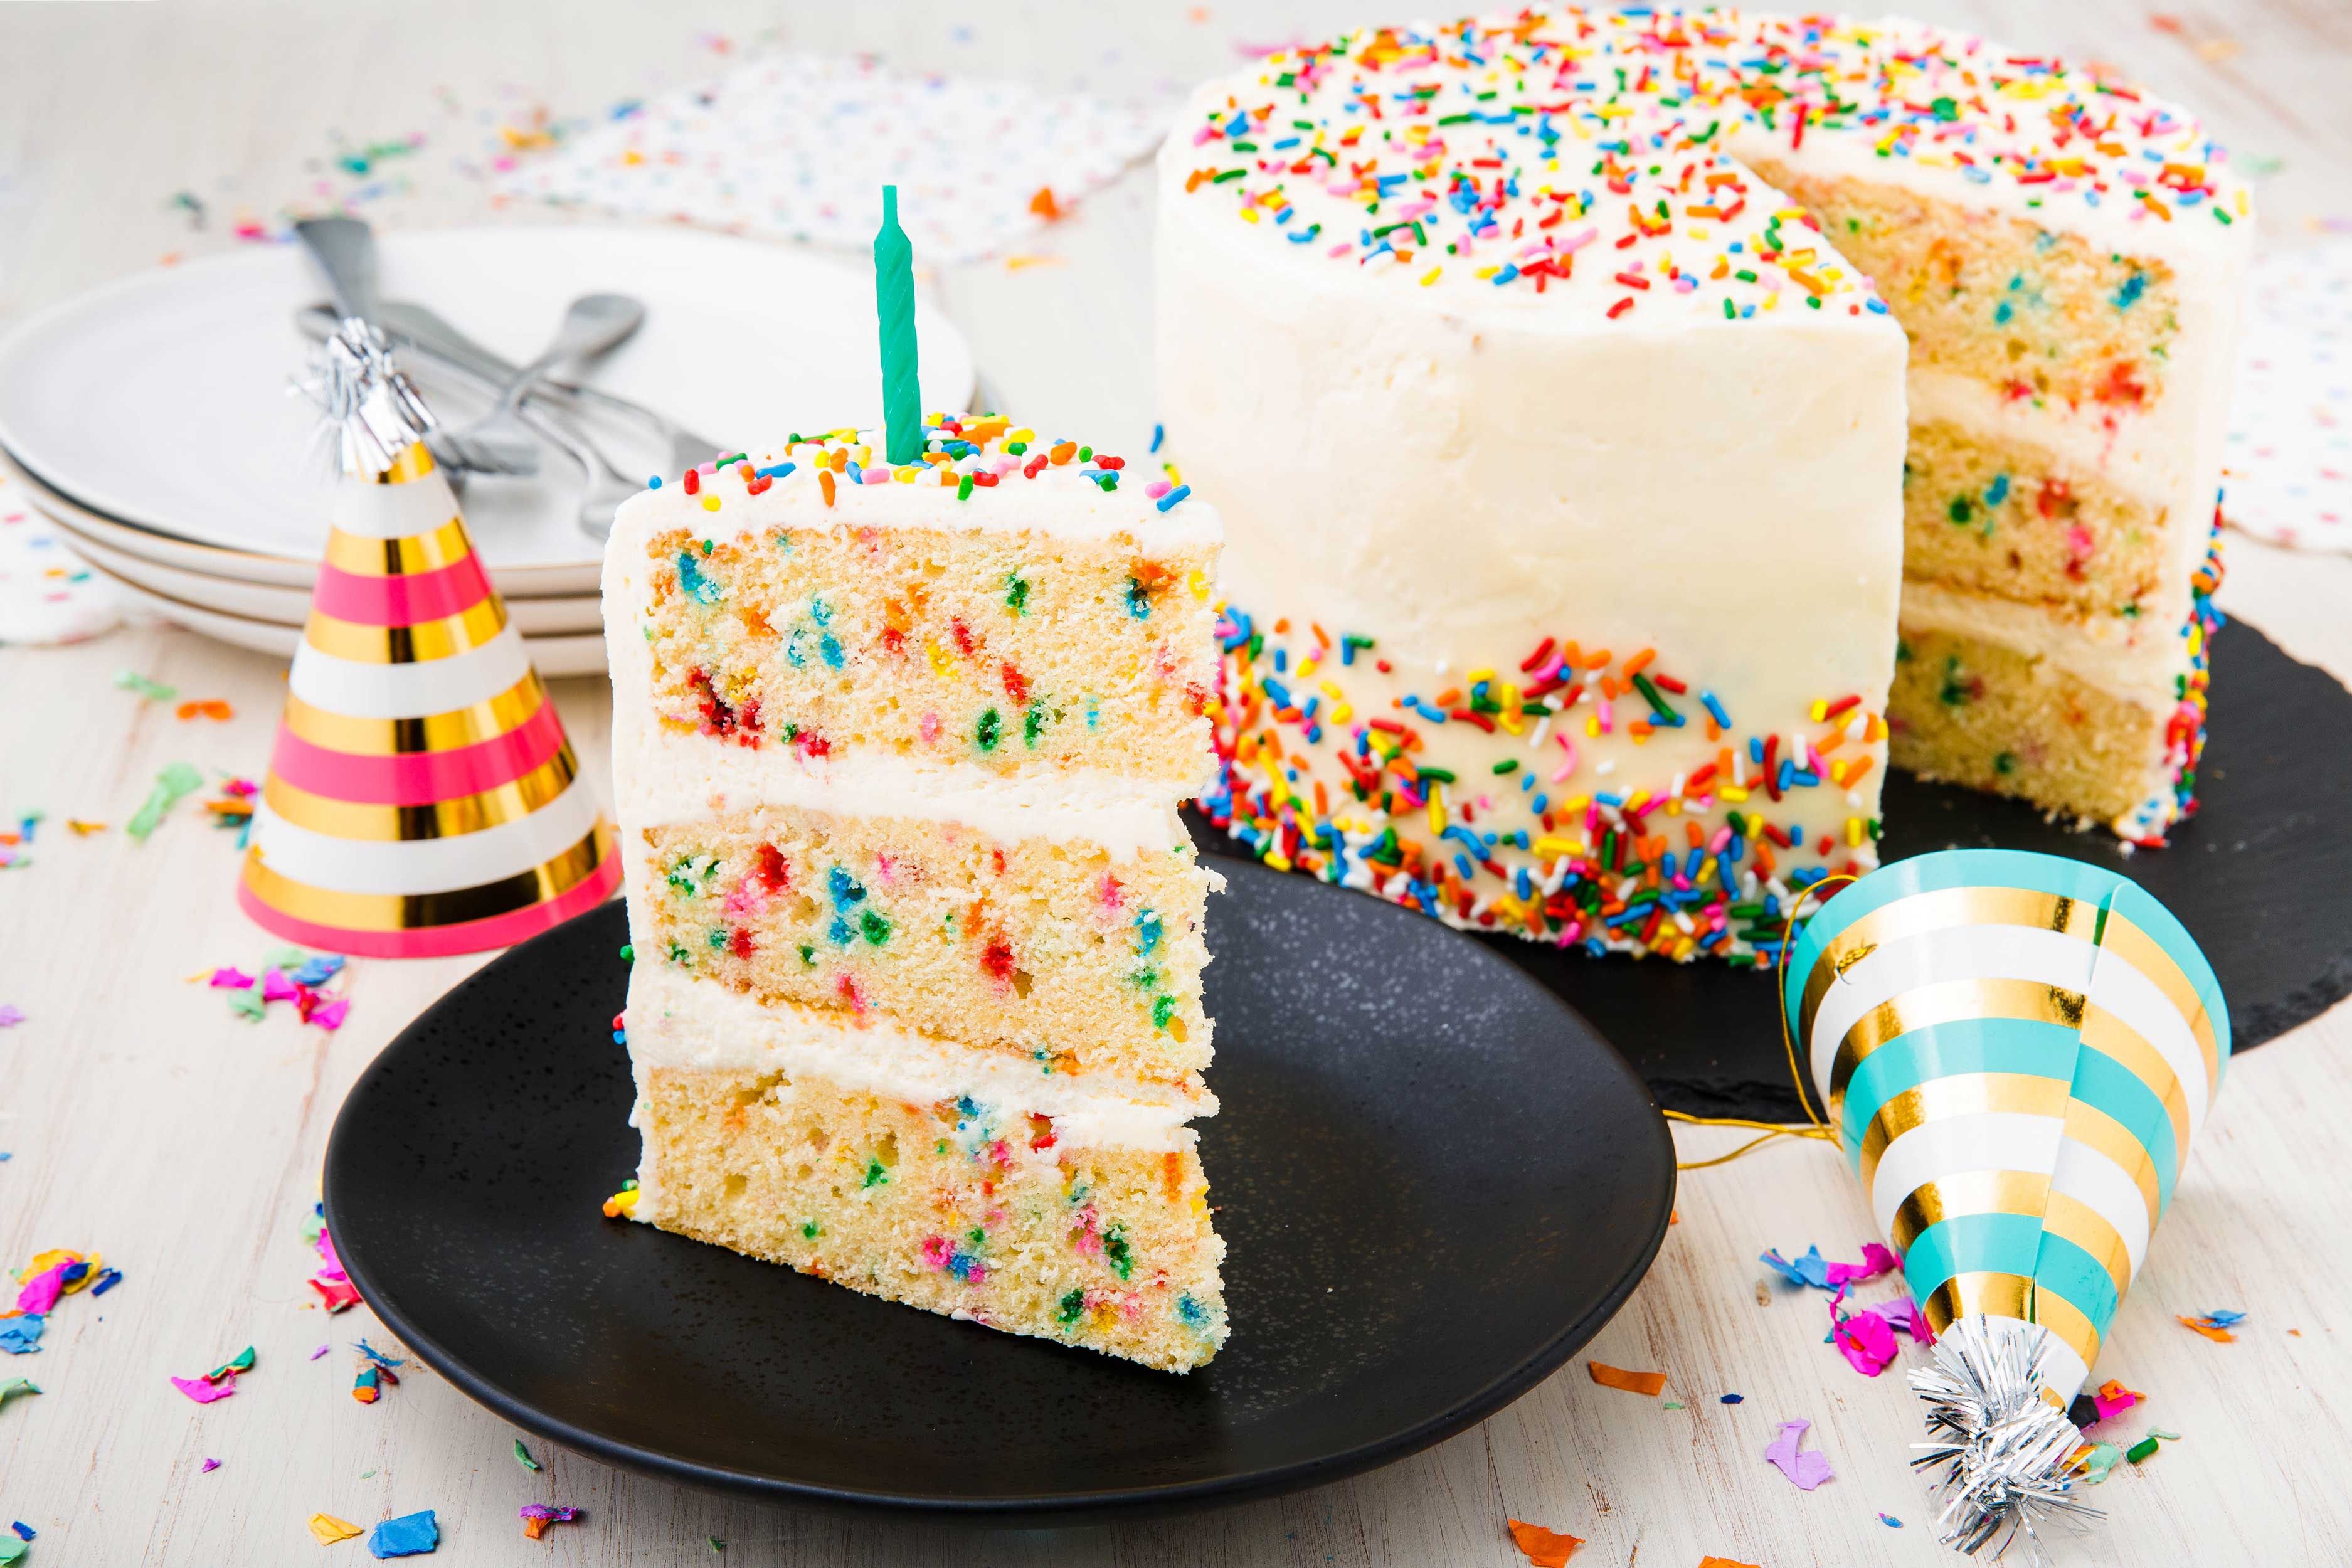 Top 23 Birthday Cake Decorating Ideas  Homemade Easy Cake Design Ideas   So Yummy  YouTube